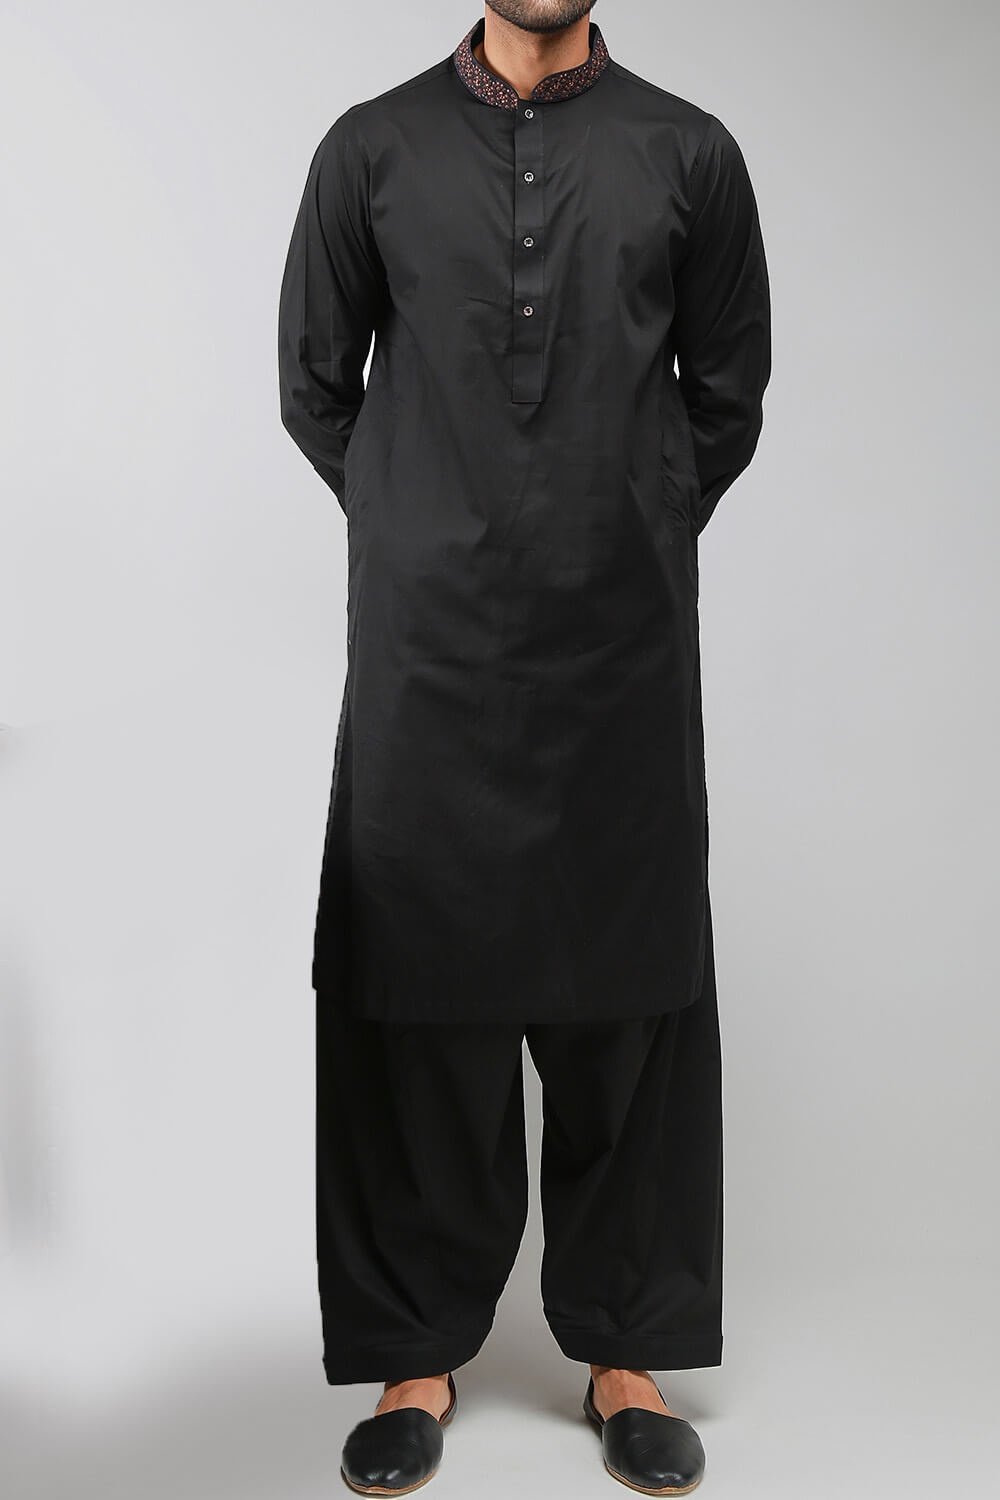 Shalwar Kameez: A Wardrobe Essential